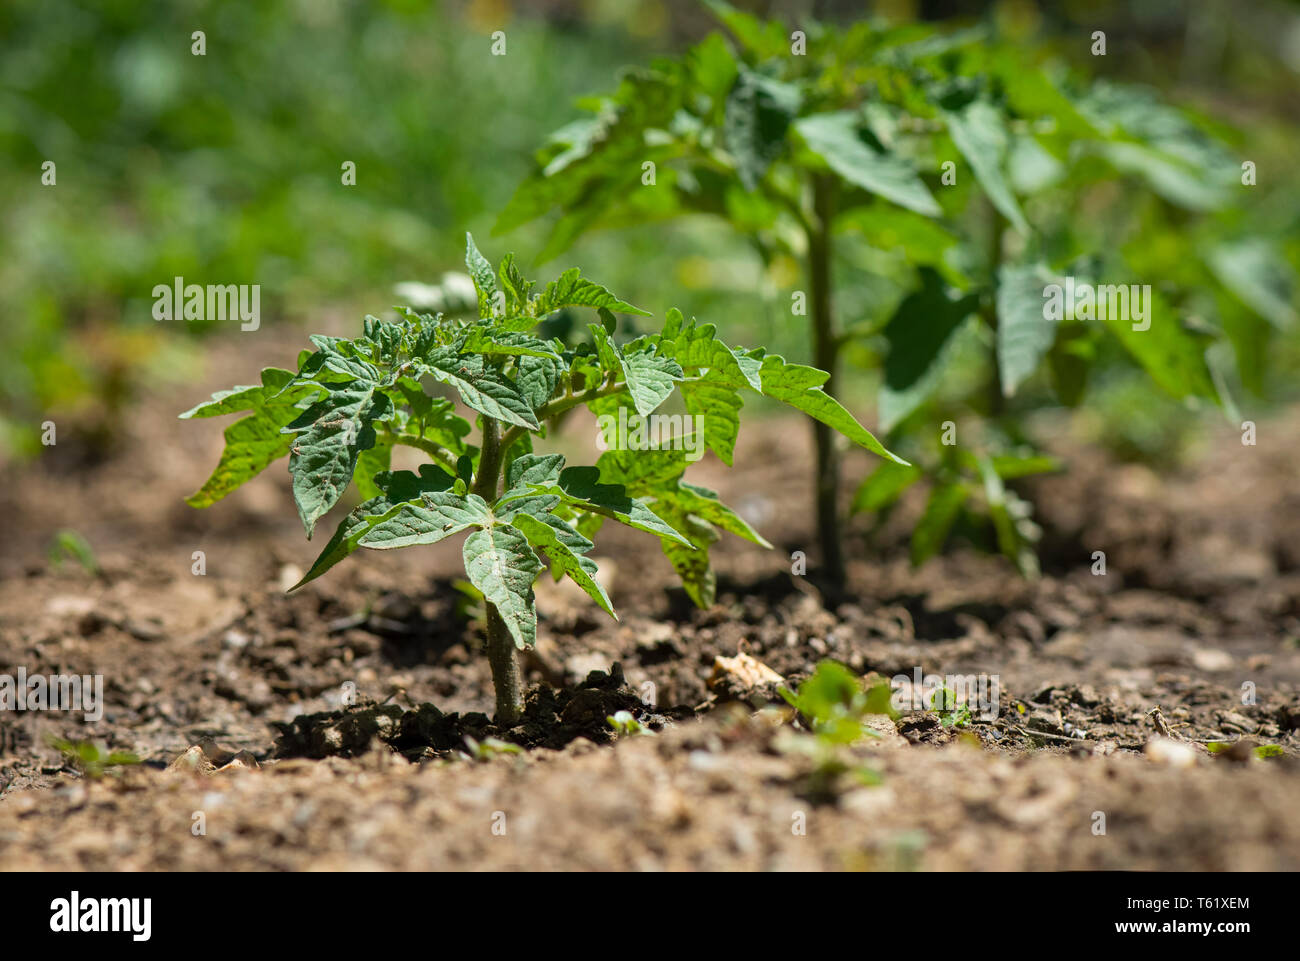 Young tomato plant Stock Photo